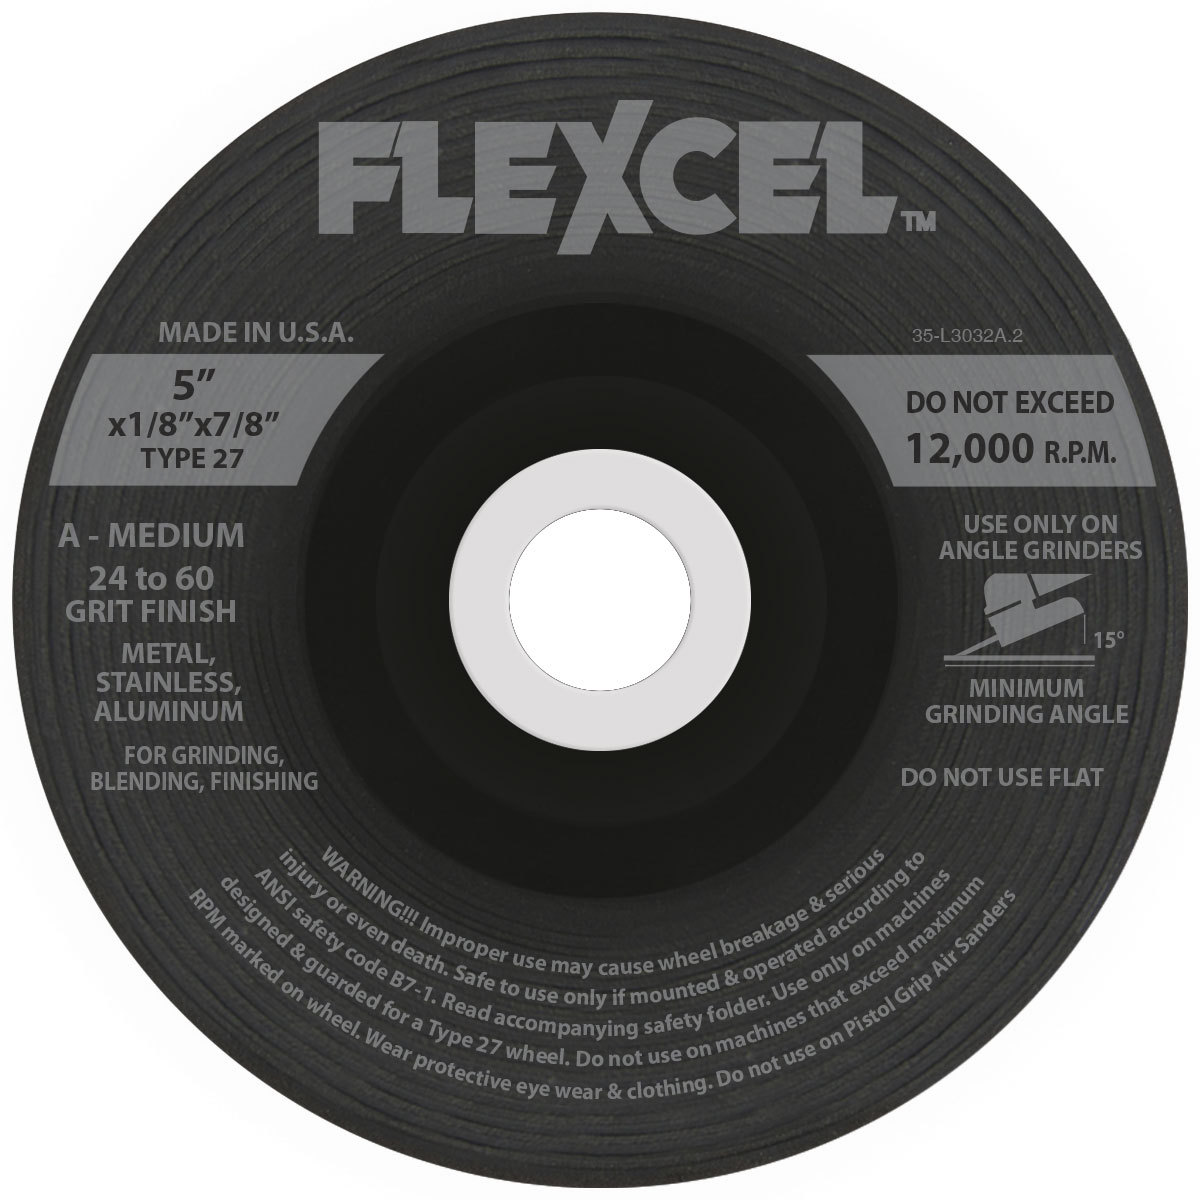 Airgas - FLES7400 - Flexovit® 5 X 1/8 X 7/8 FLEXCEL® 24 - 60 Grit  Aluminum Oxide Grain Reinforced Type 27 Semi Flexible Grinding Wheel